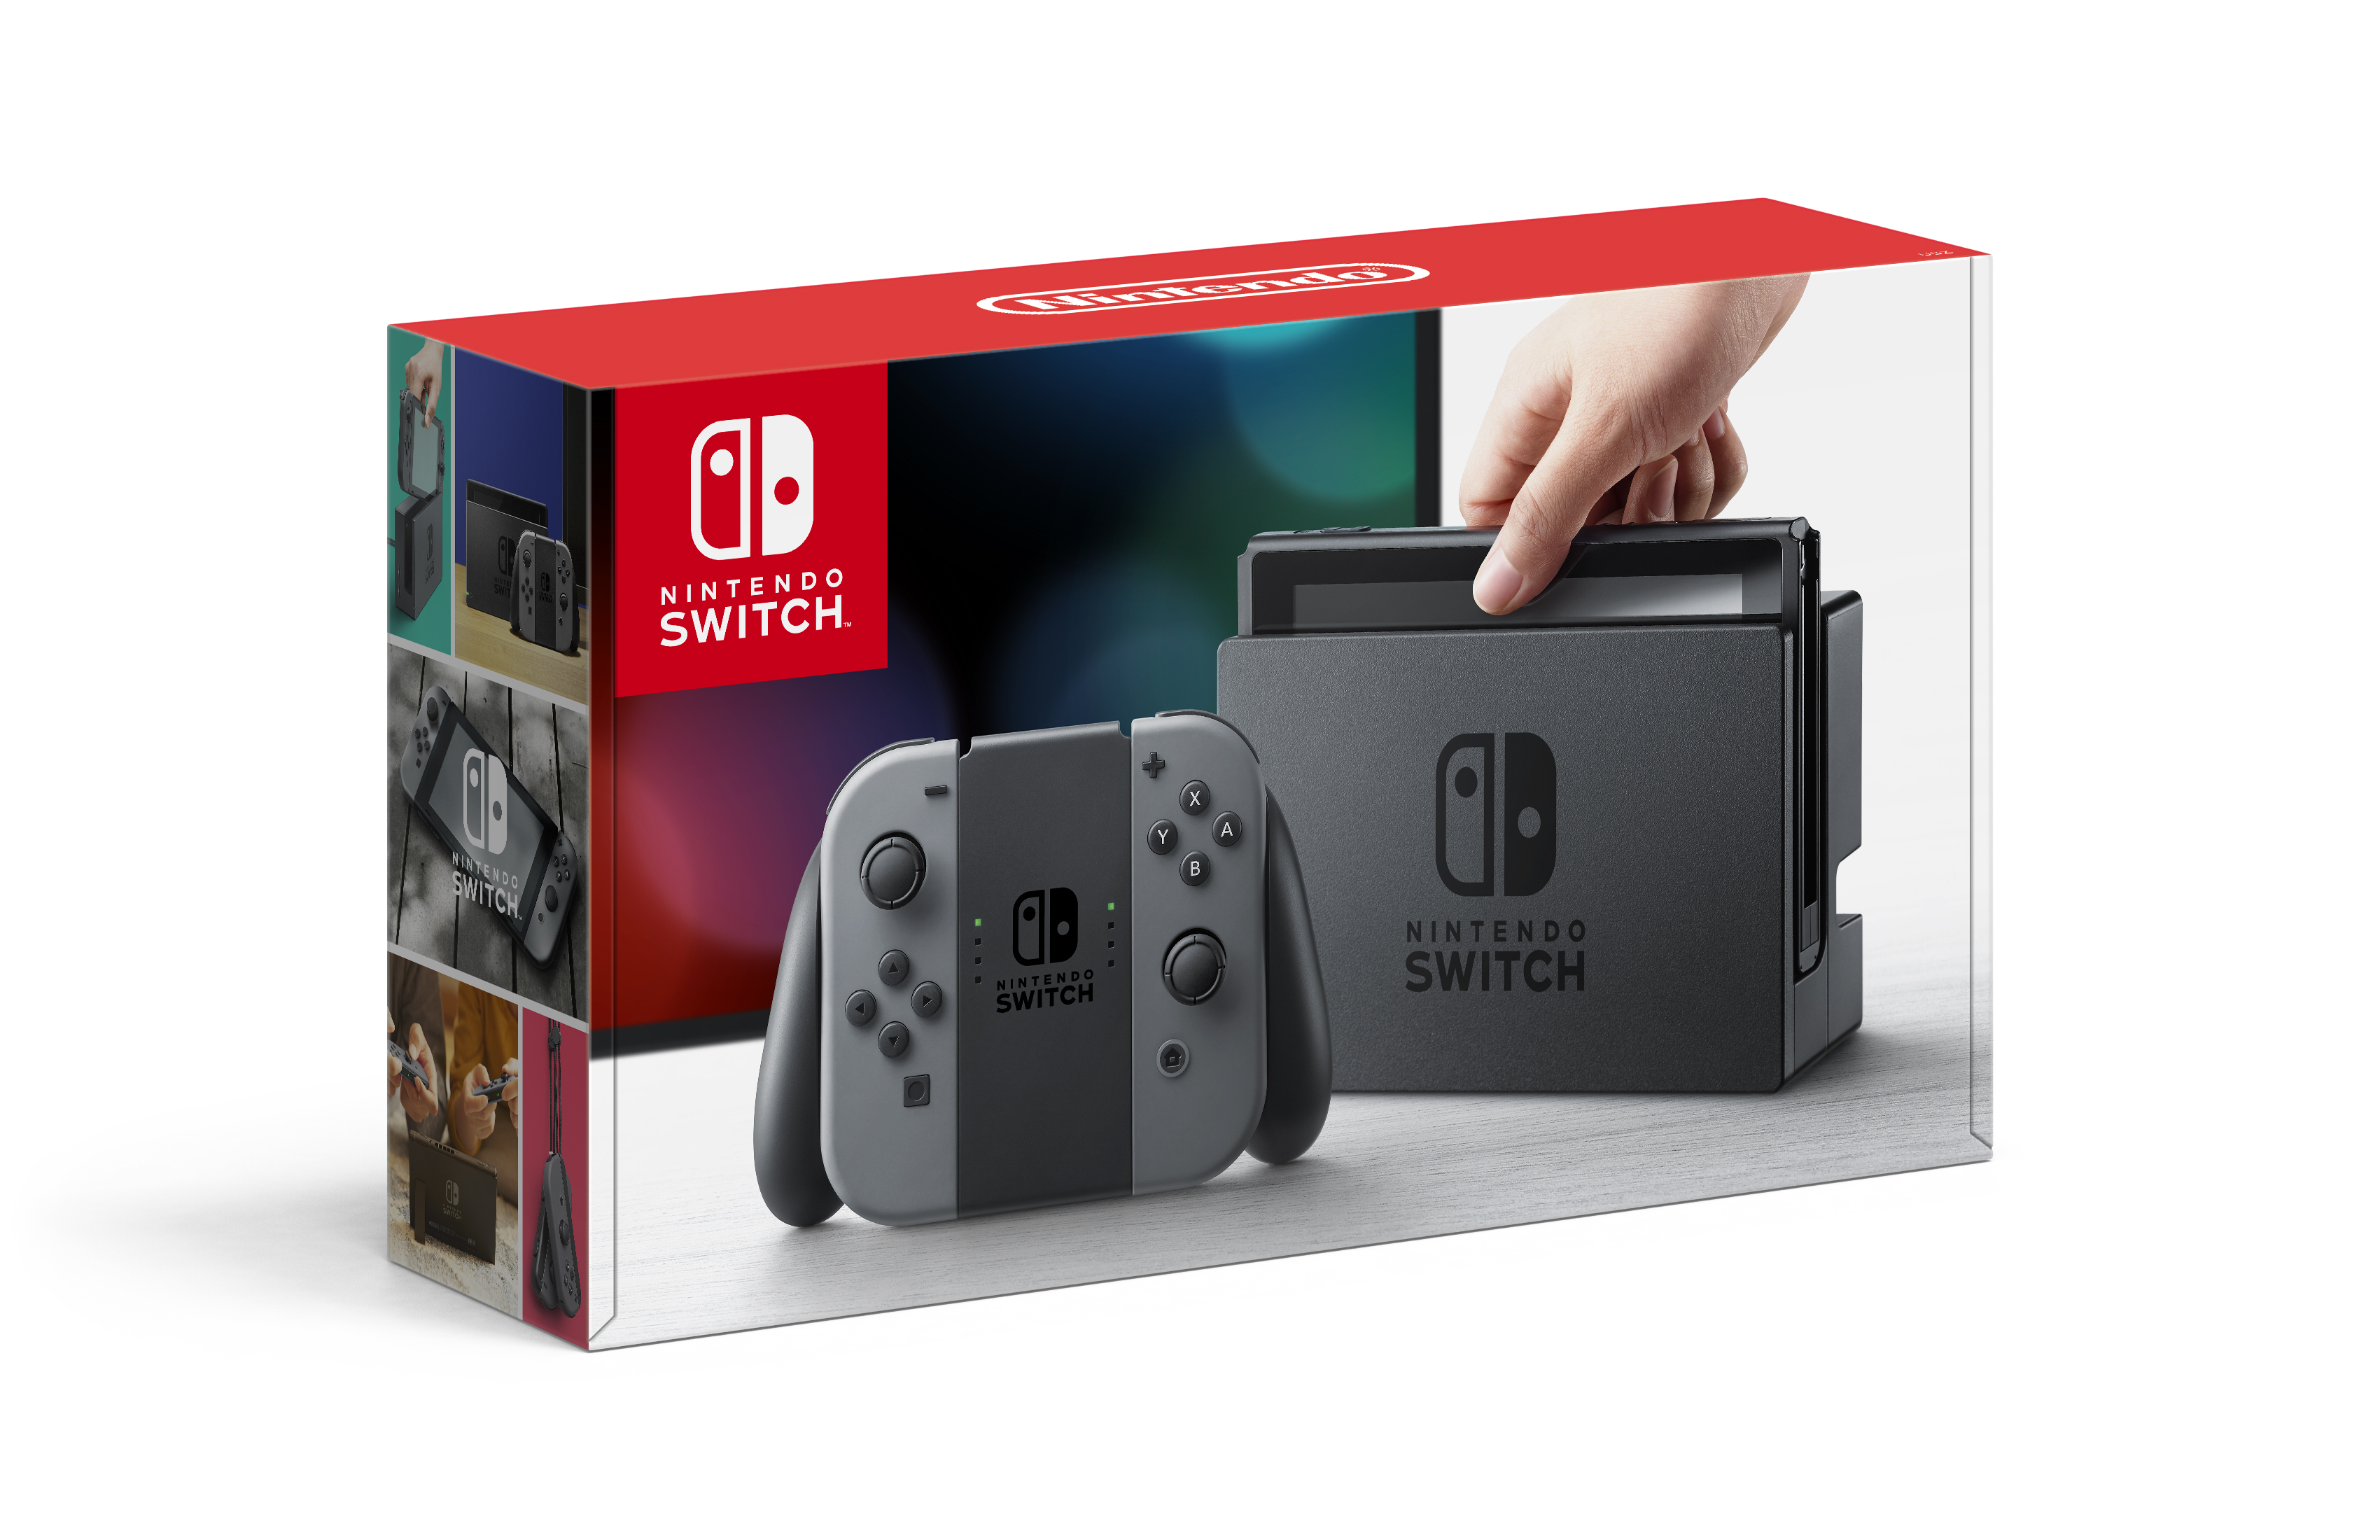 Nintendo Switch Console with Gray Joy-Con (Old Model) - Walmart.com